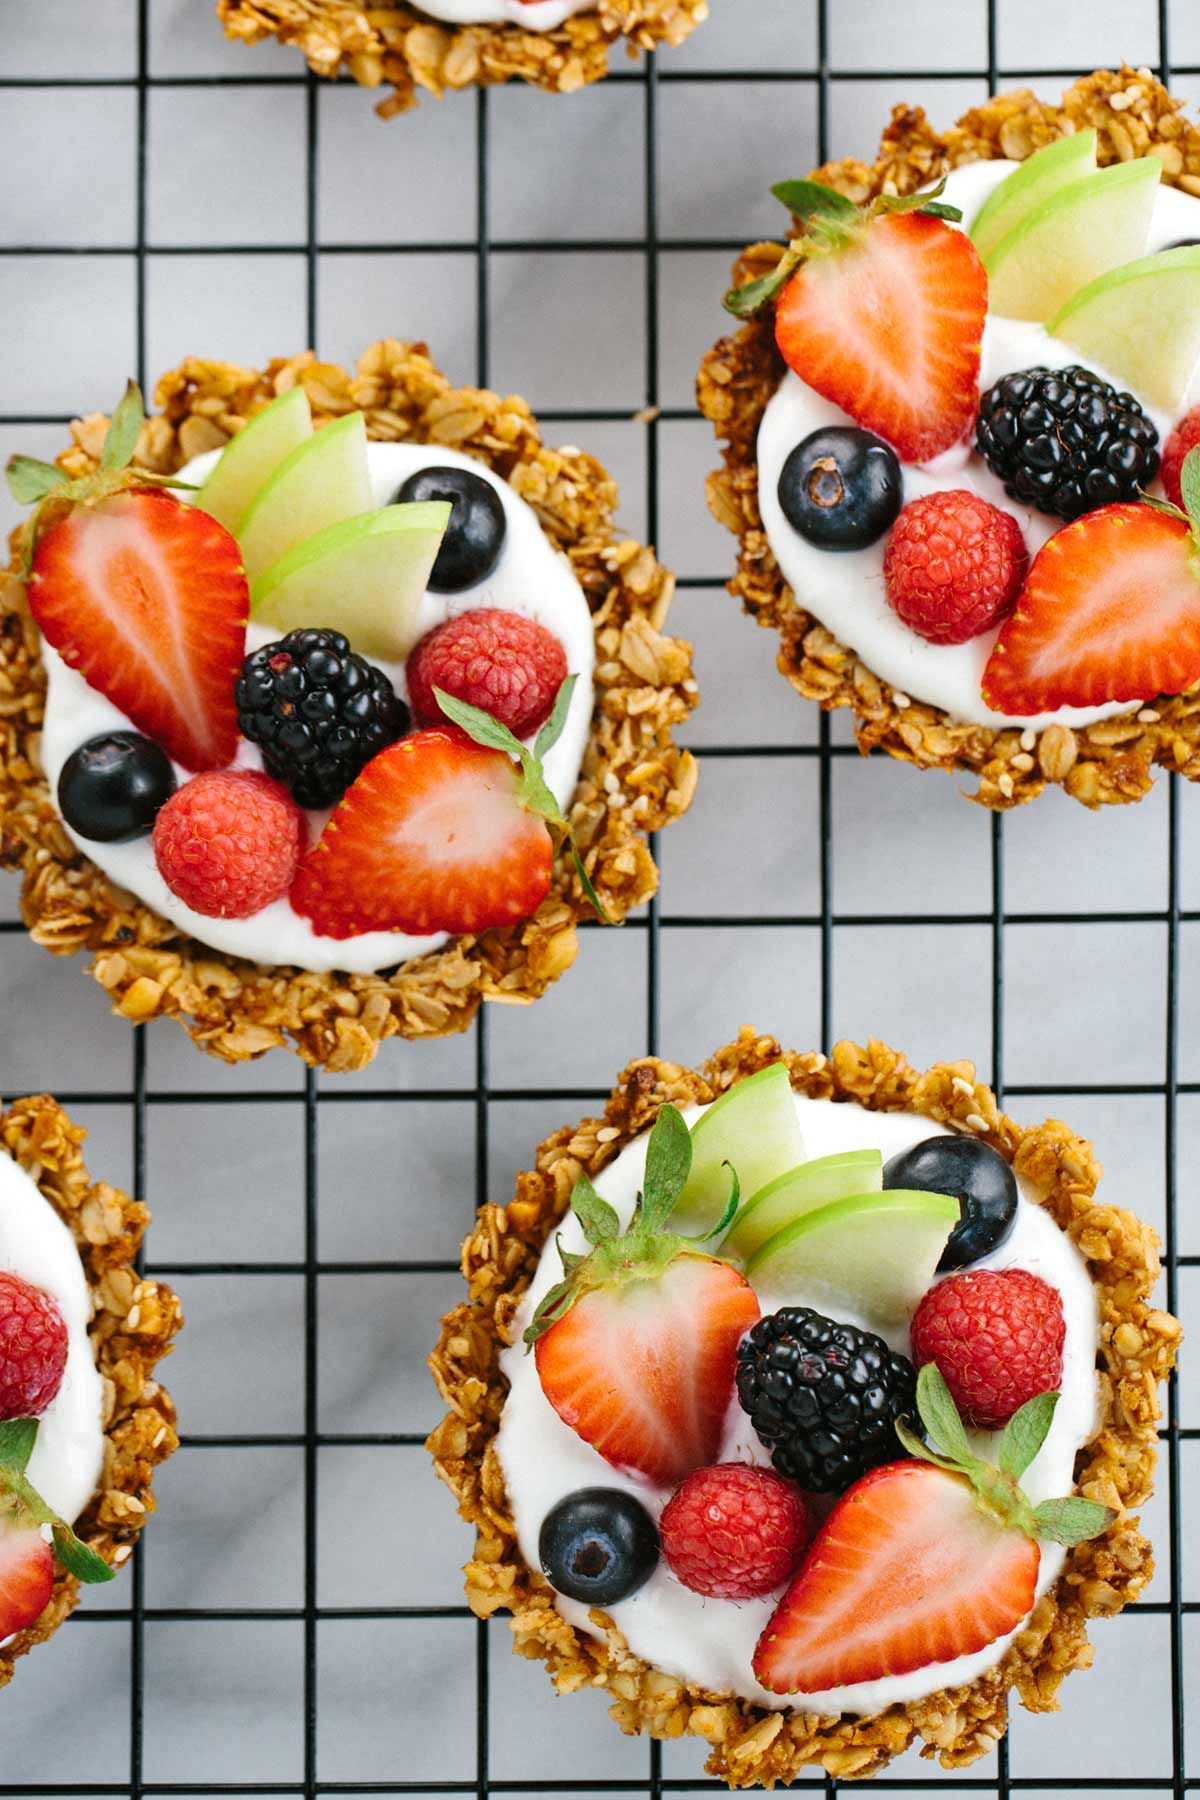 Breakfast Granola Fruit Tart with Yogurt Recipe – Customize your favorite fillings